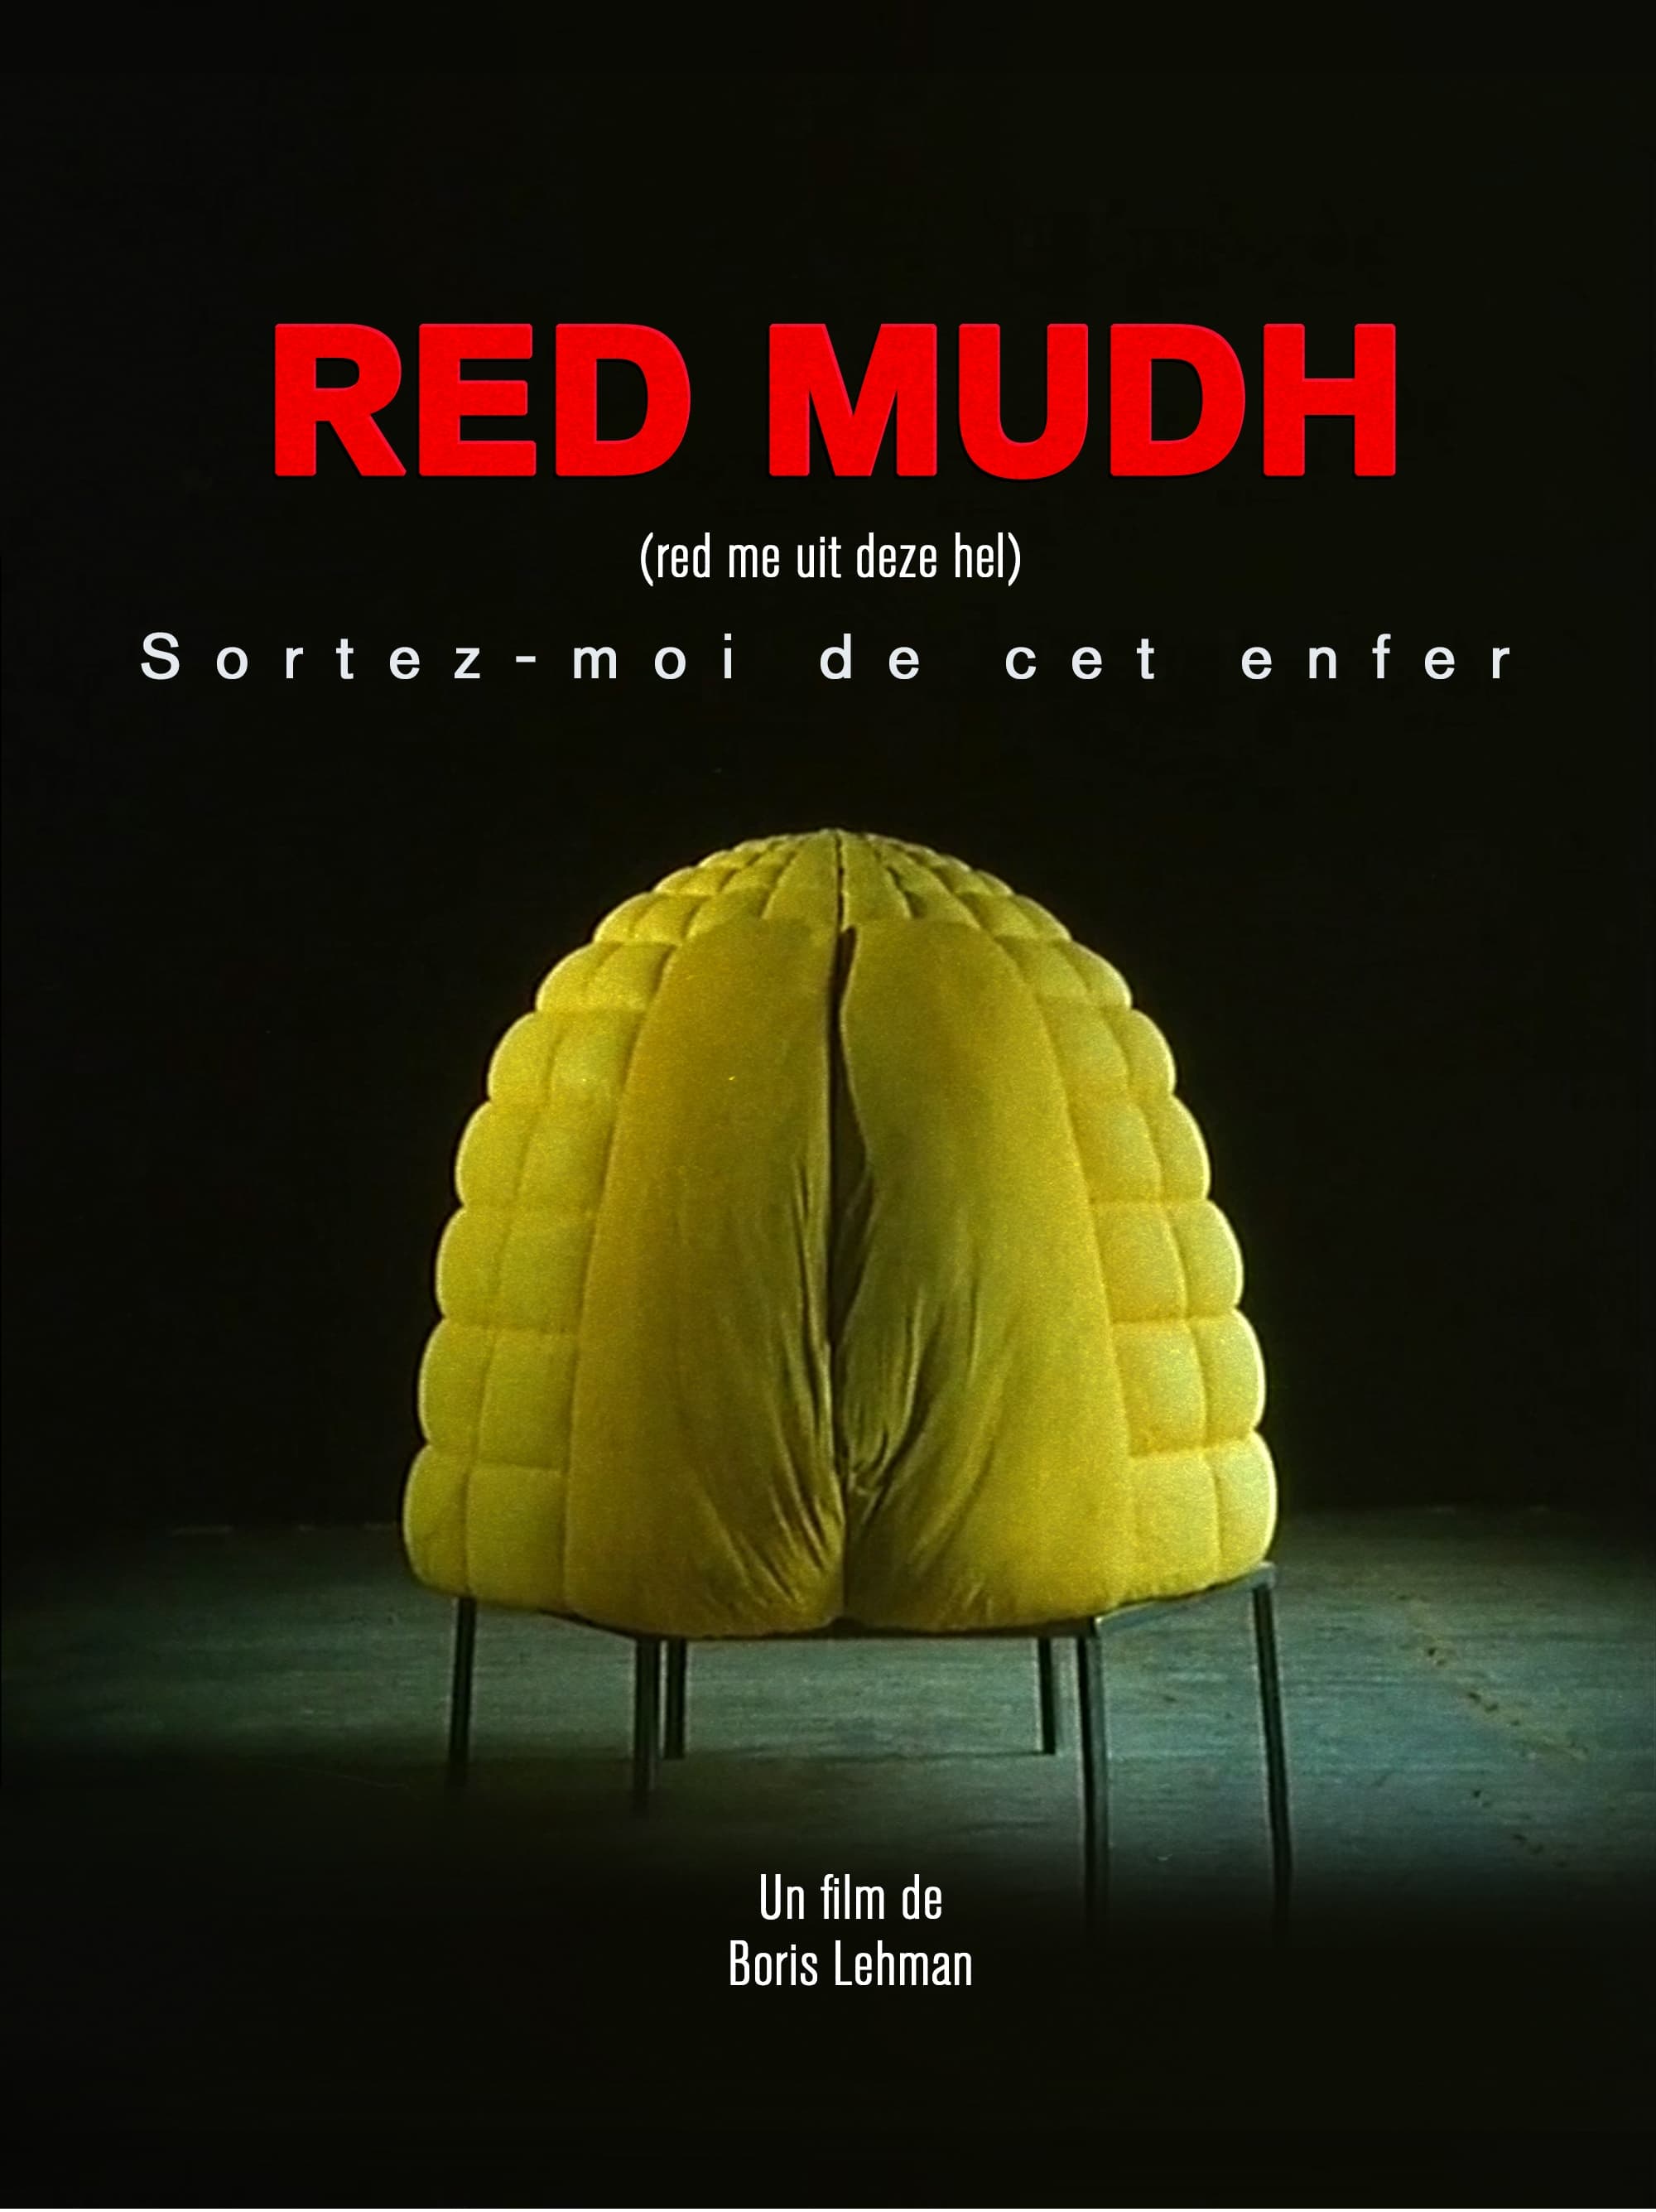 Red Mudh